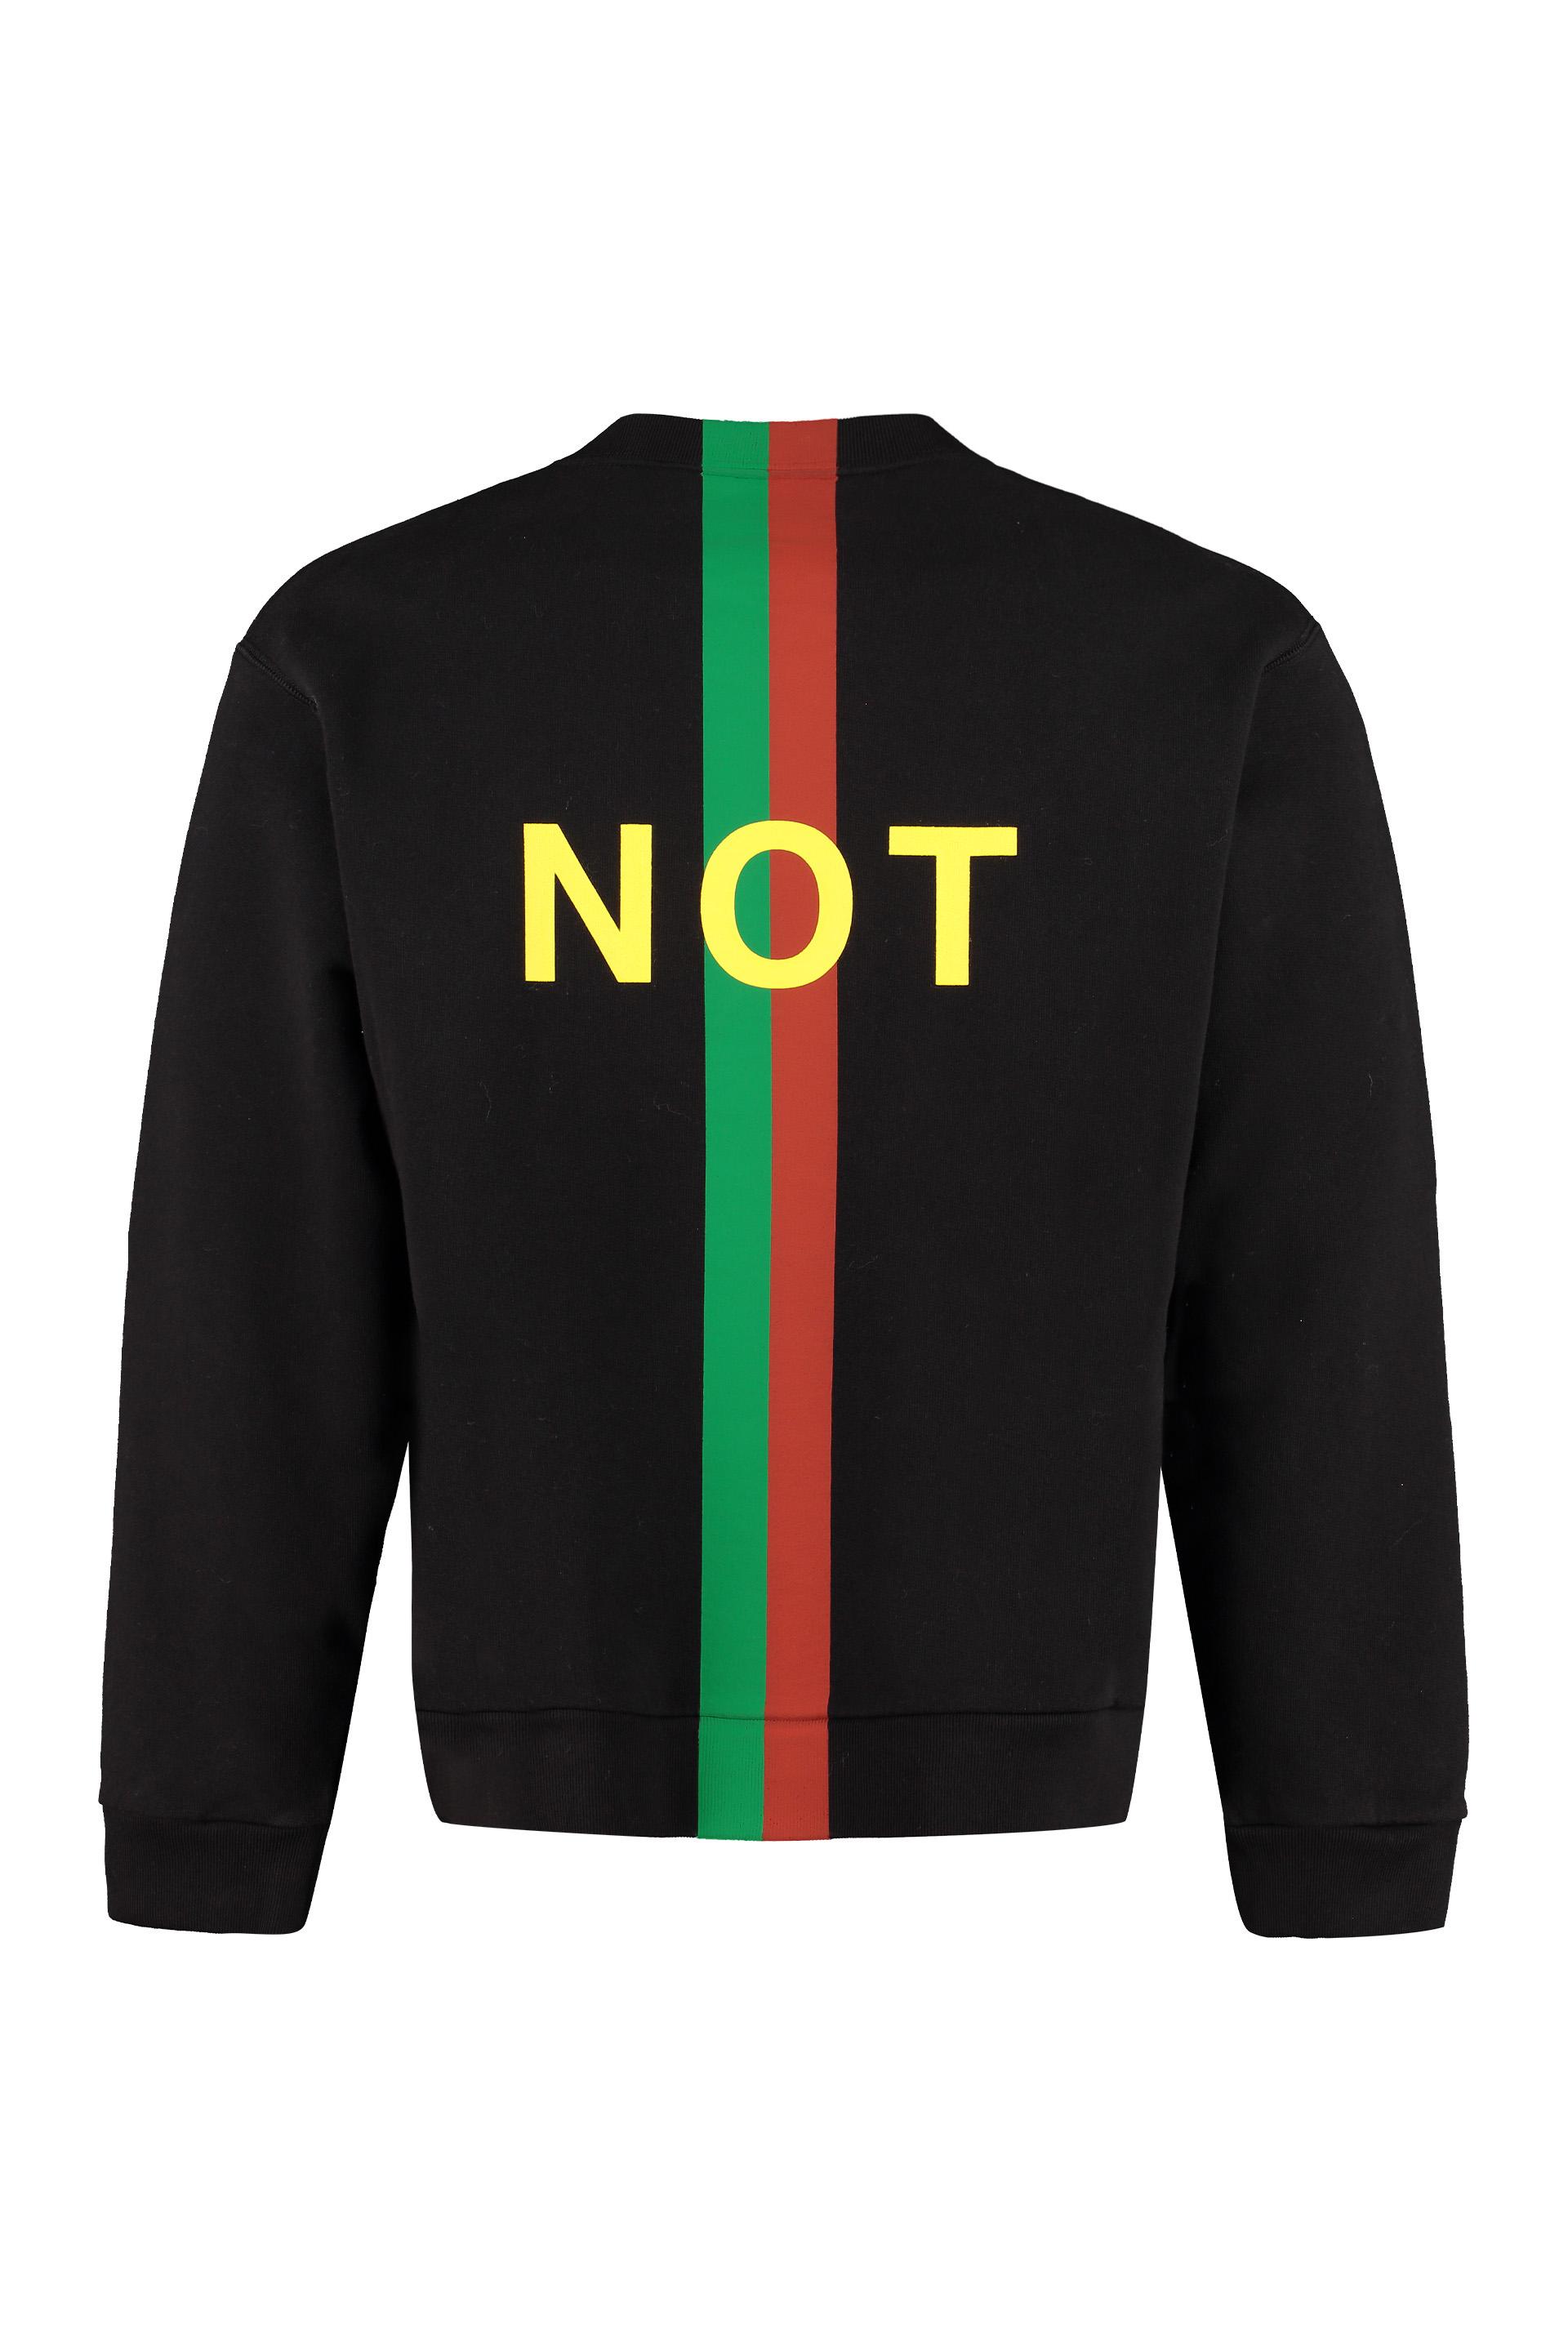 Gucci 'fake/not' Print Sweatshirt in Black for Men | Lyst